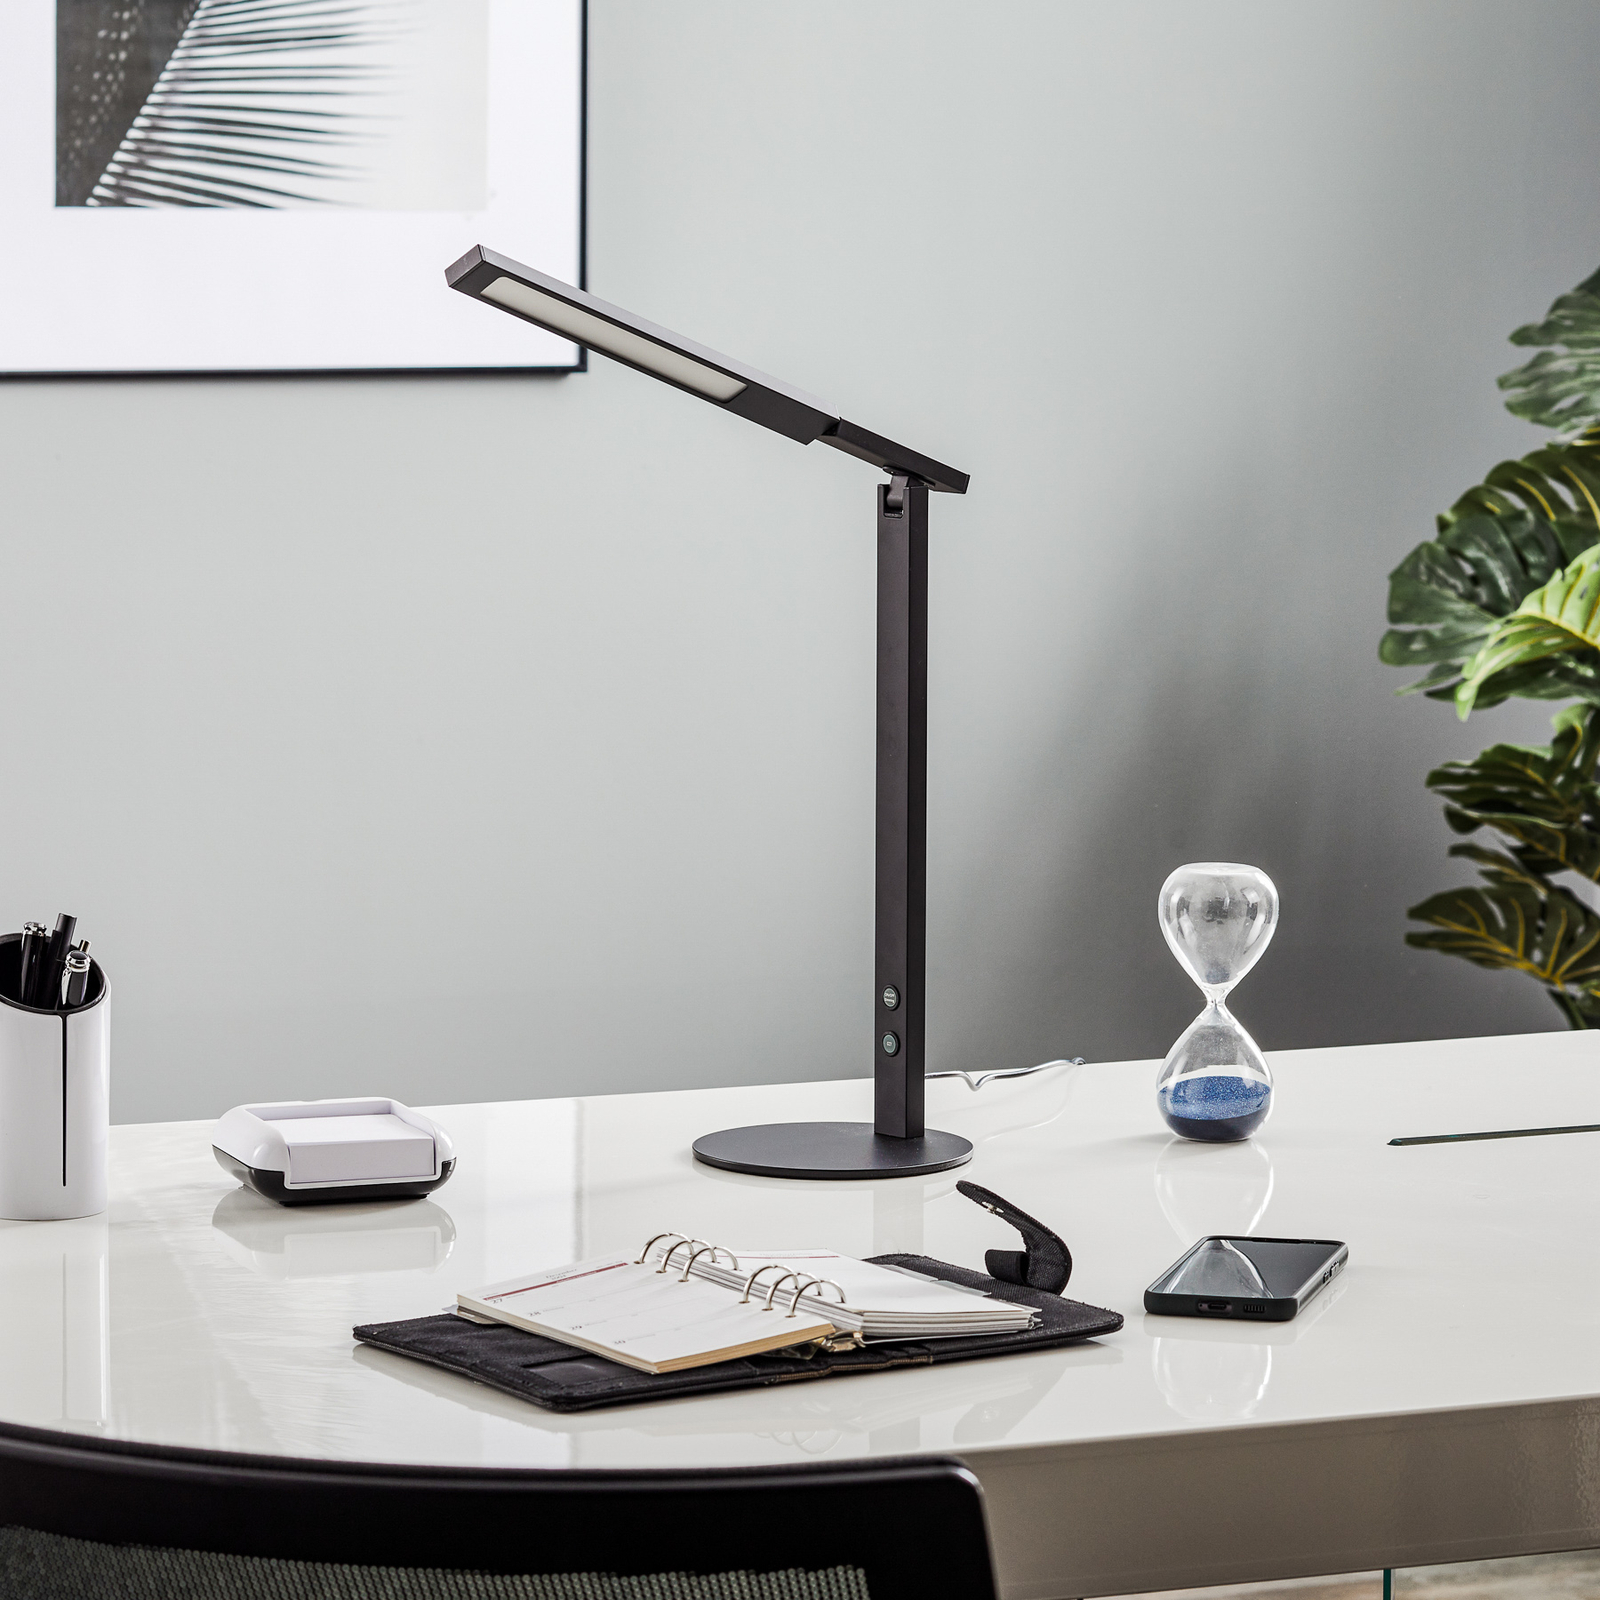 Ideāla LED galda lampa ar regulējamu apgaismojumu, melna